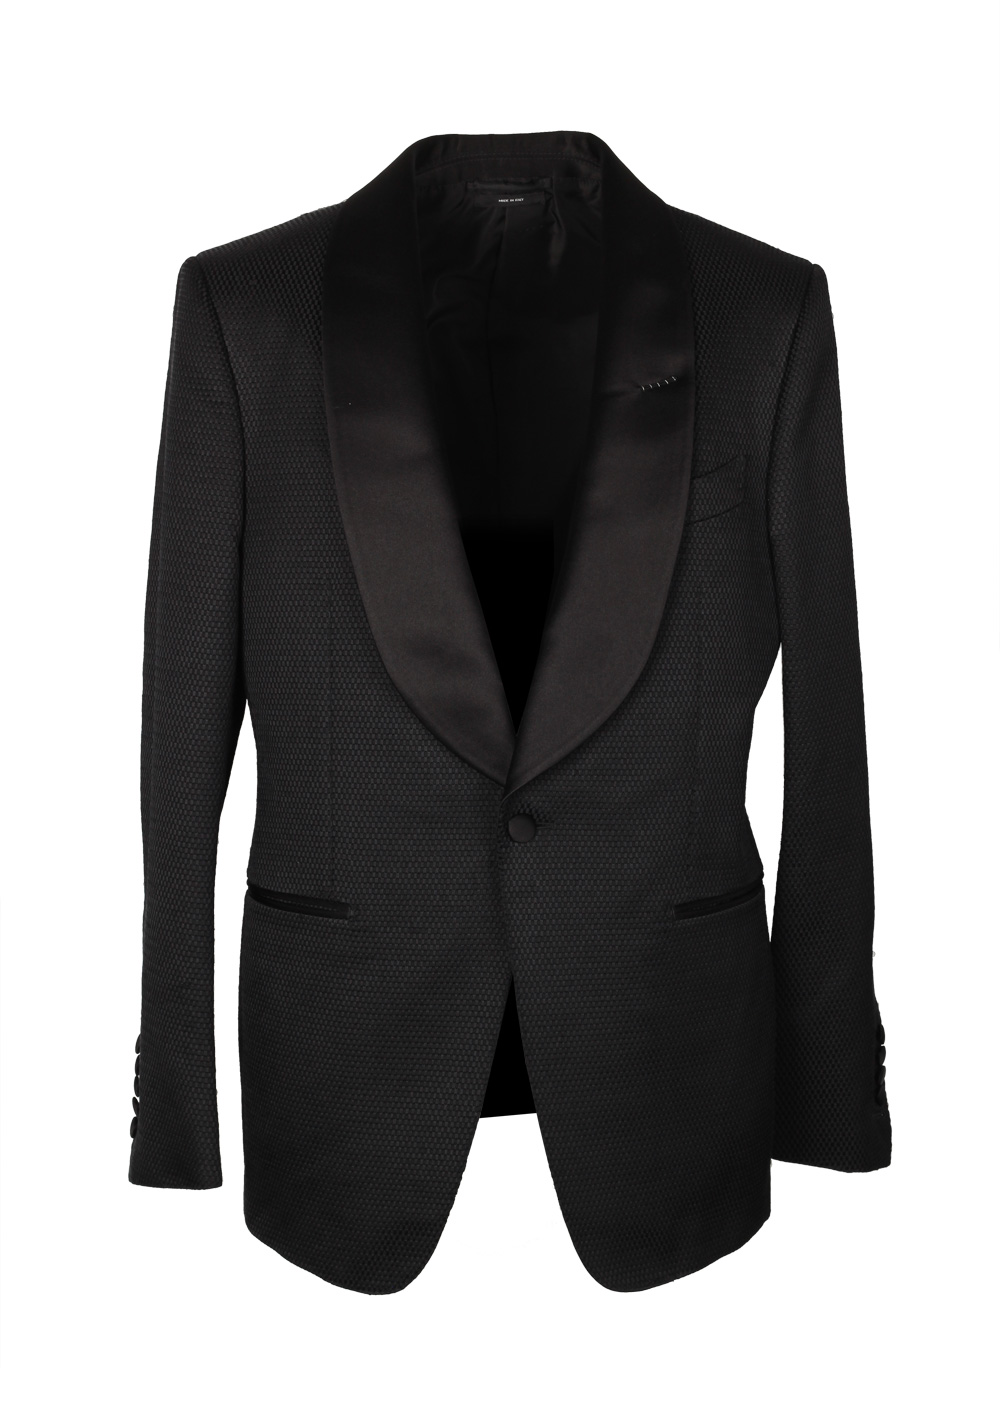 TOM FORD O’Connor Black Sport Coat Tuxedo Dinner Jacket Size 50 / 40R U ...